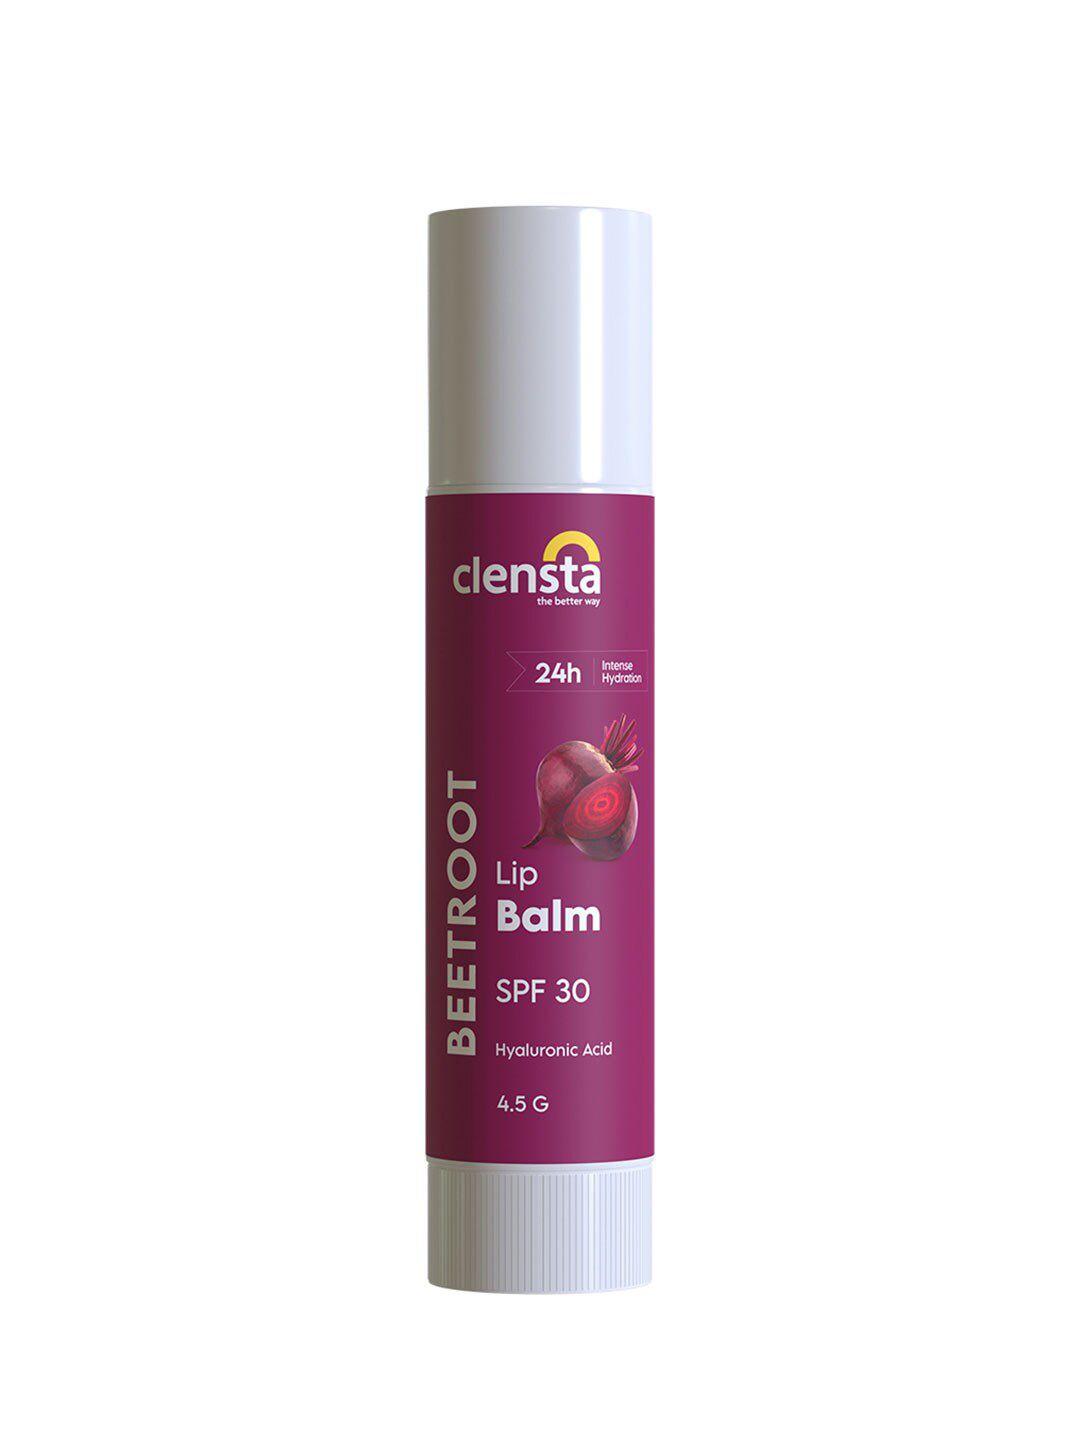 clensta beetroot lip balm with spf 30 - 5g